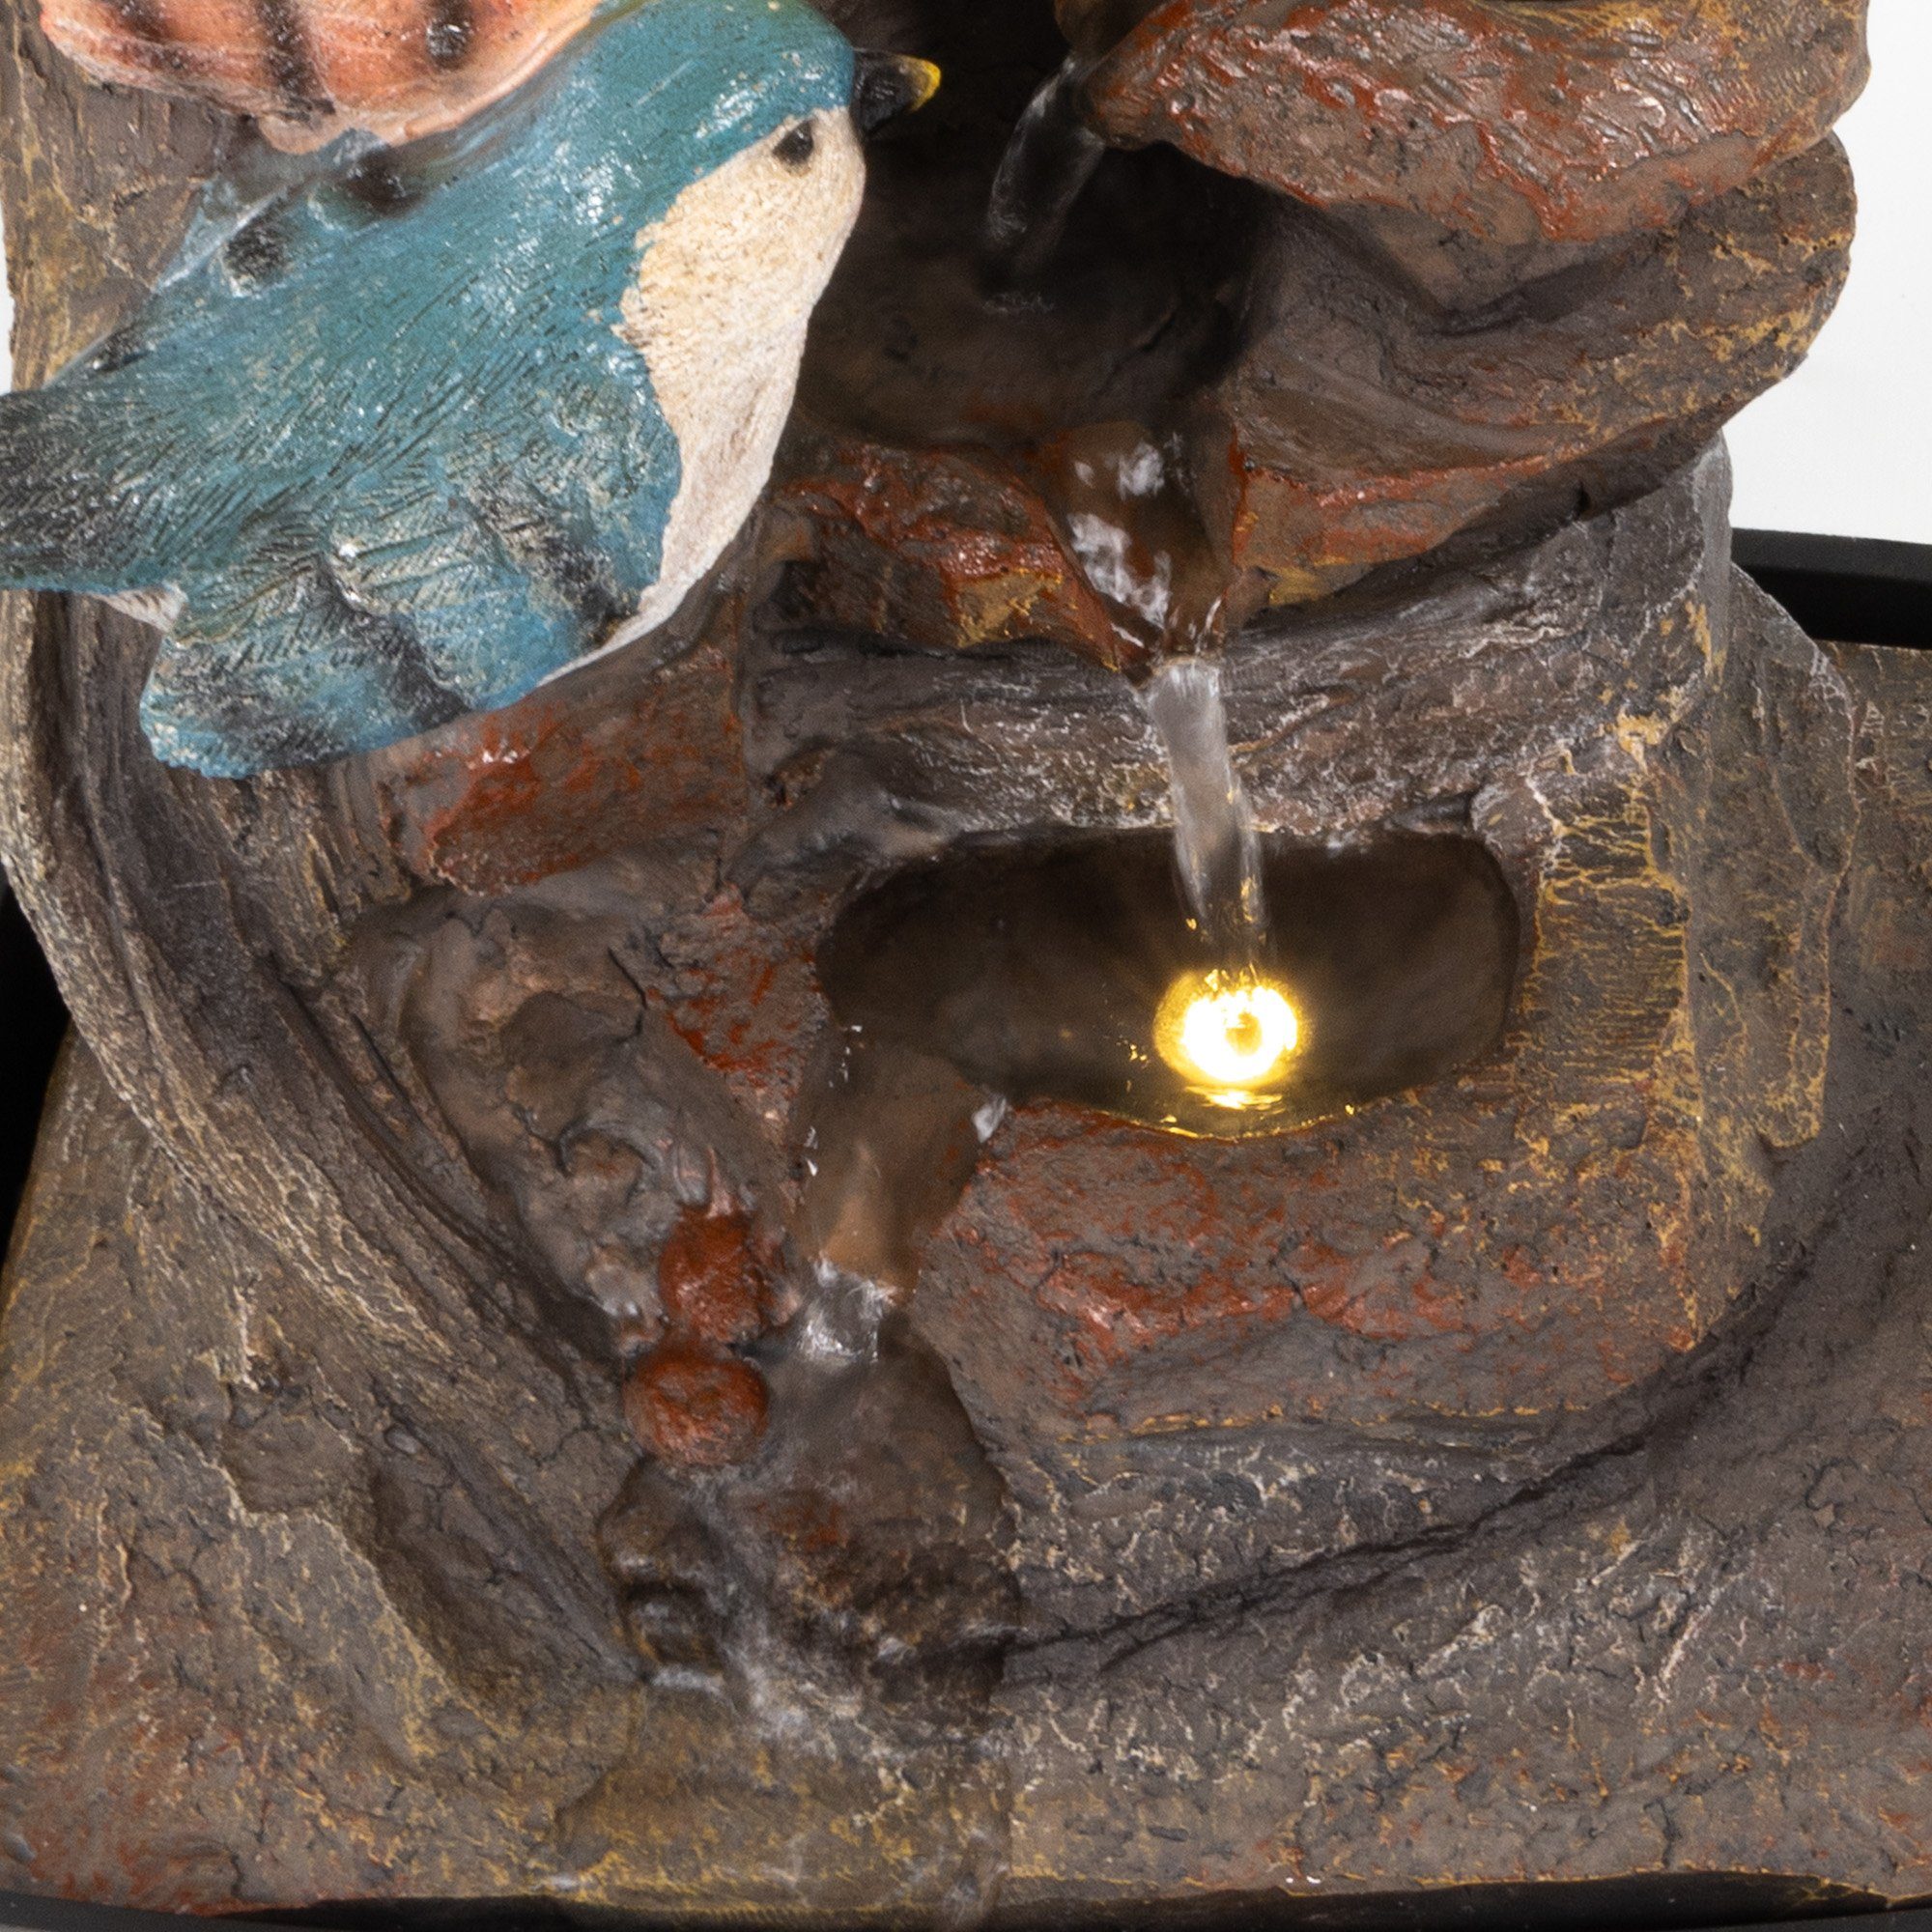 Vögel LED-Beleuchtung mit NATIV Motiv-Tischbrunnen Zimmerbrunnen Beleuchtung, Pumpe und